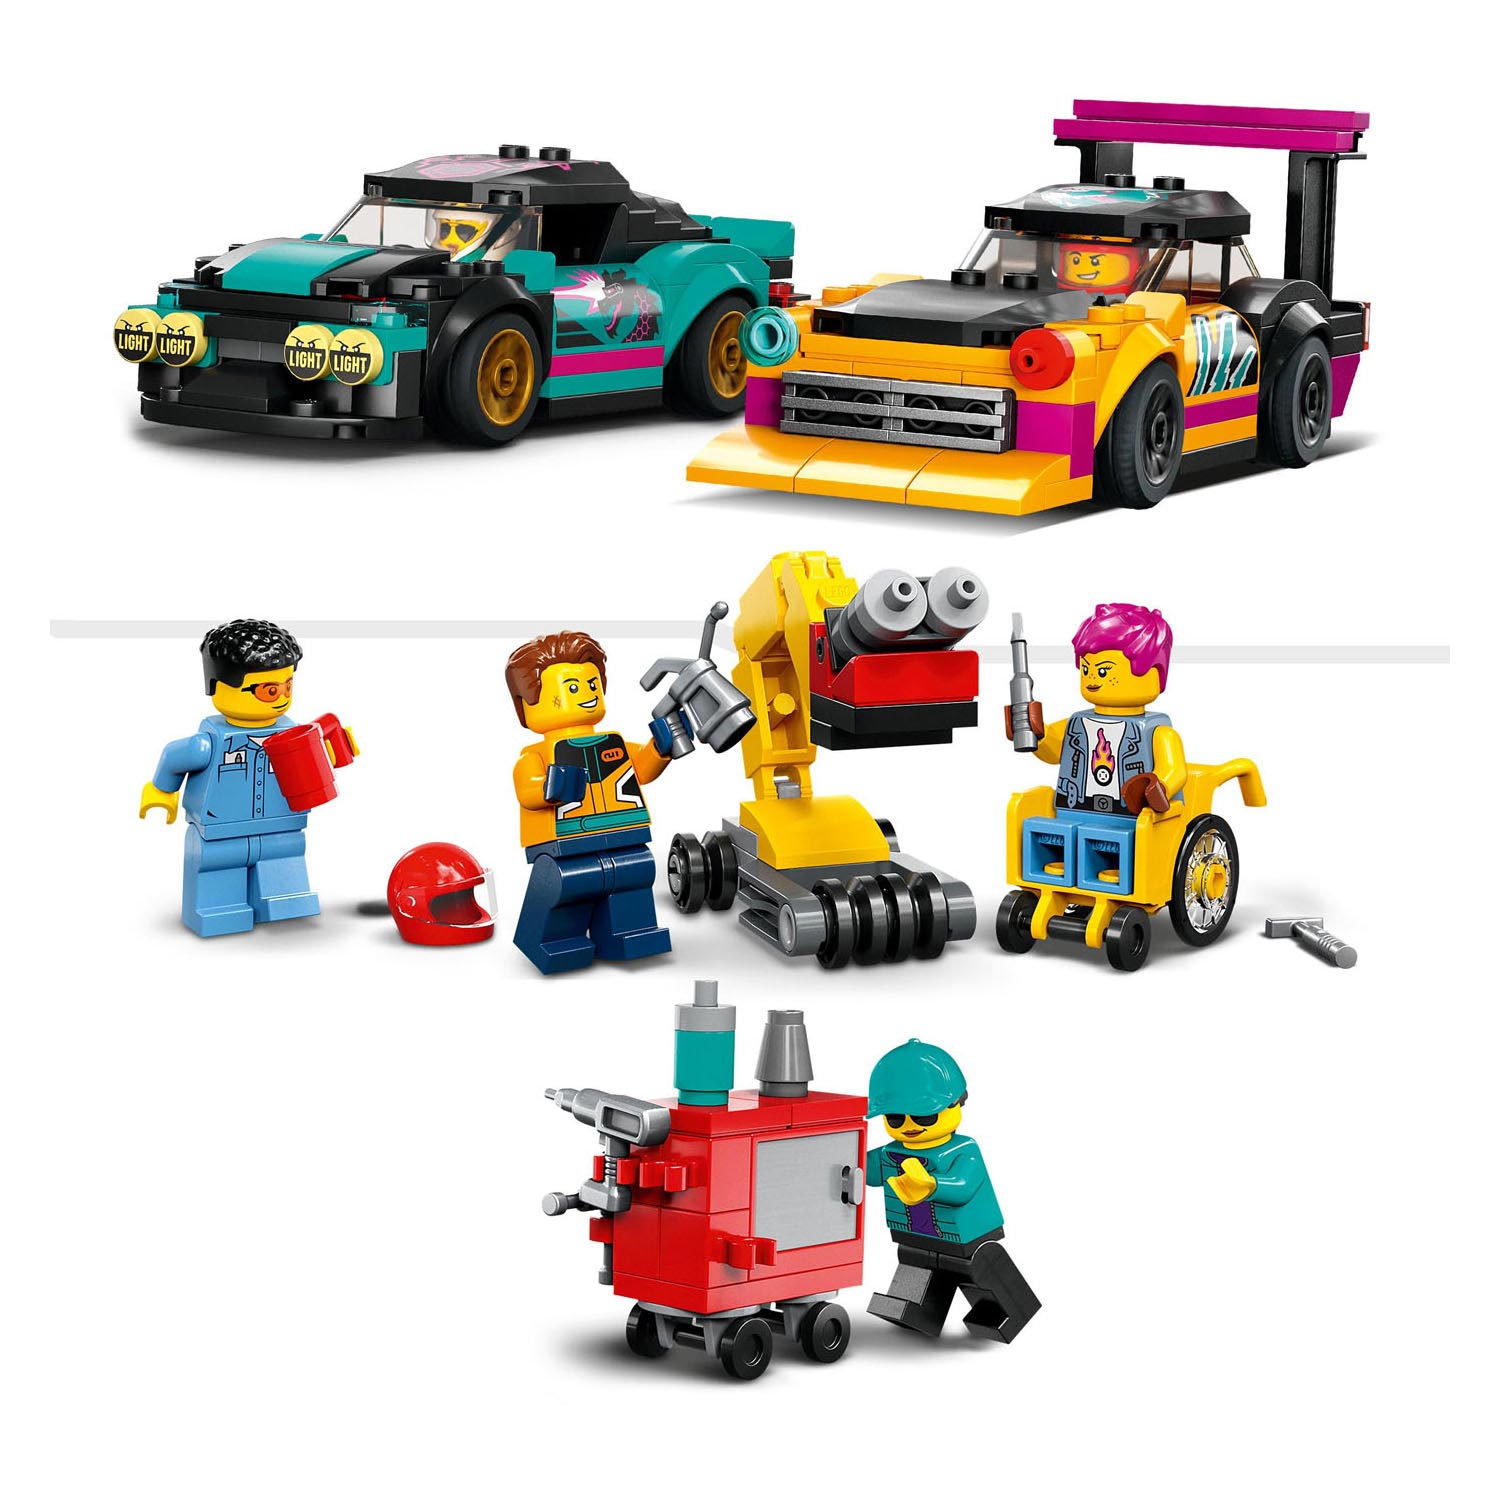 LEGO City 60389 Anpassbare Autogarage